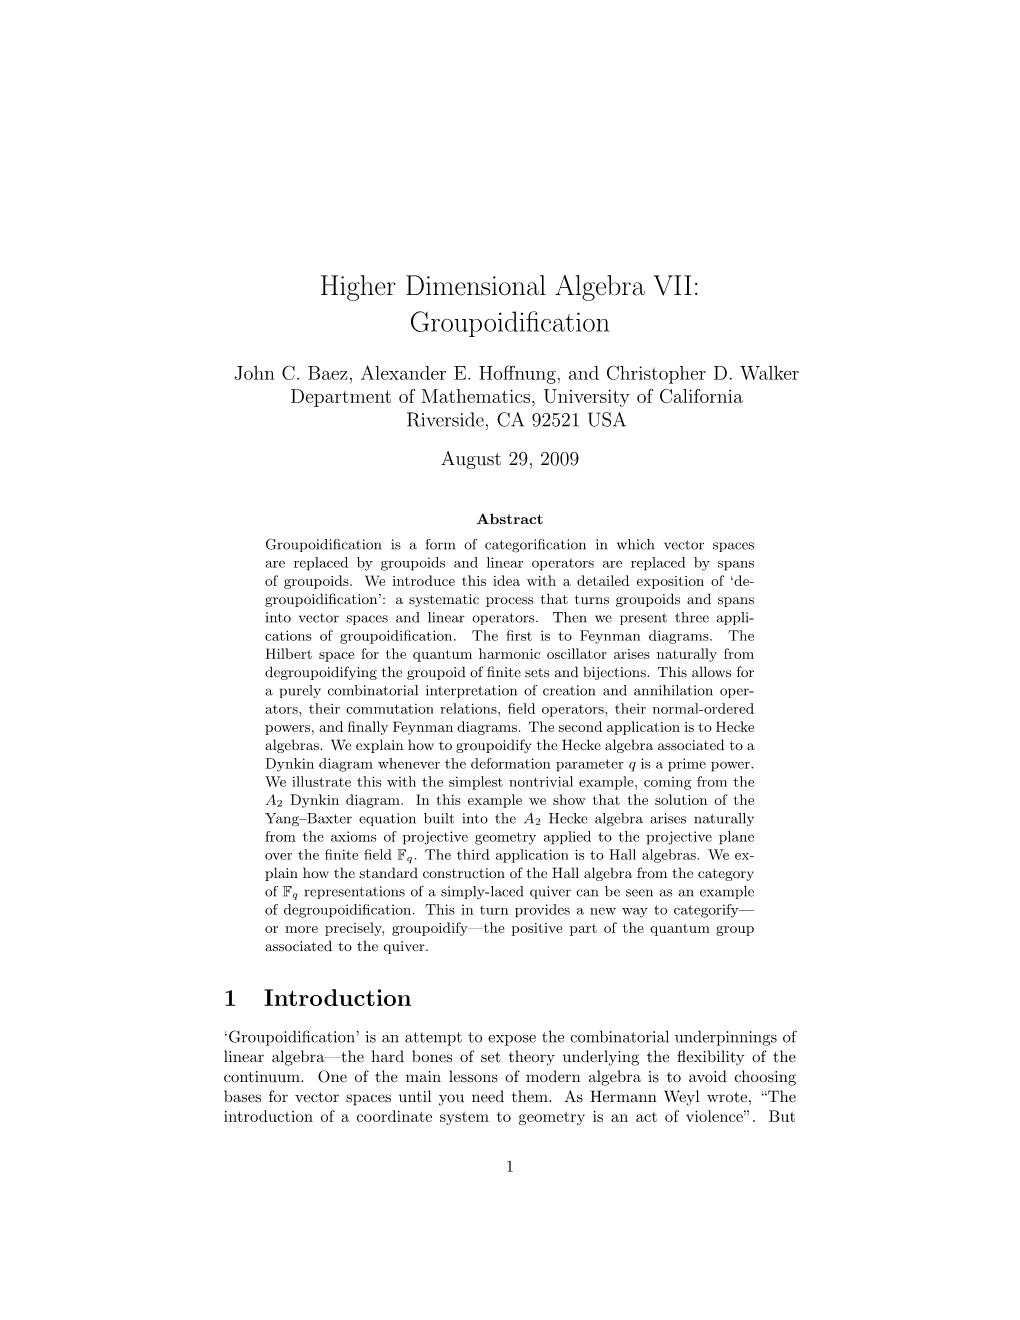 Higher Dimensional Algebra VII: Groupoidification